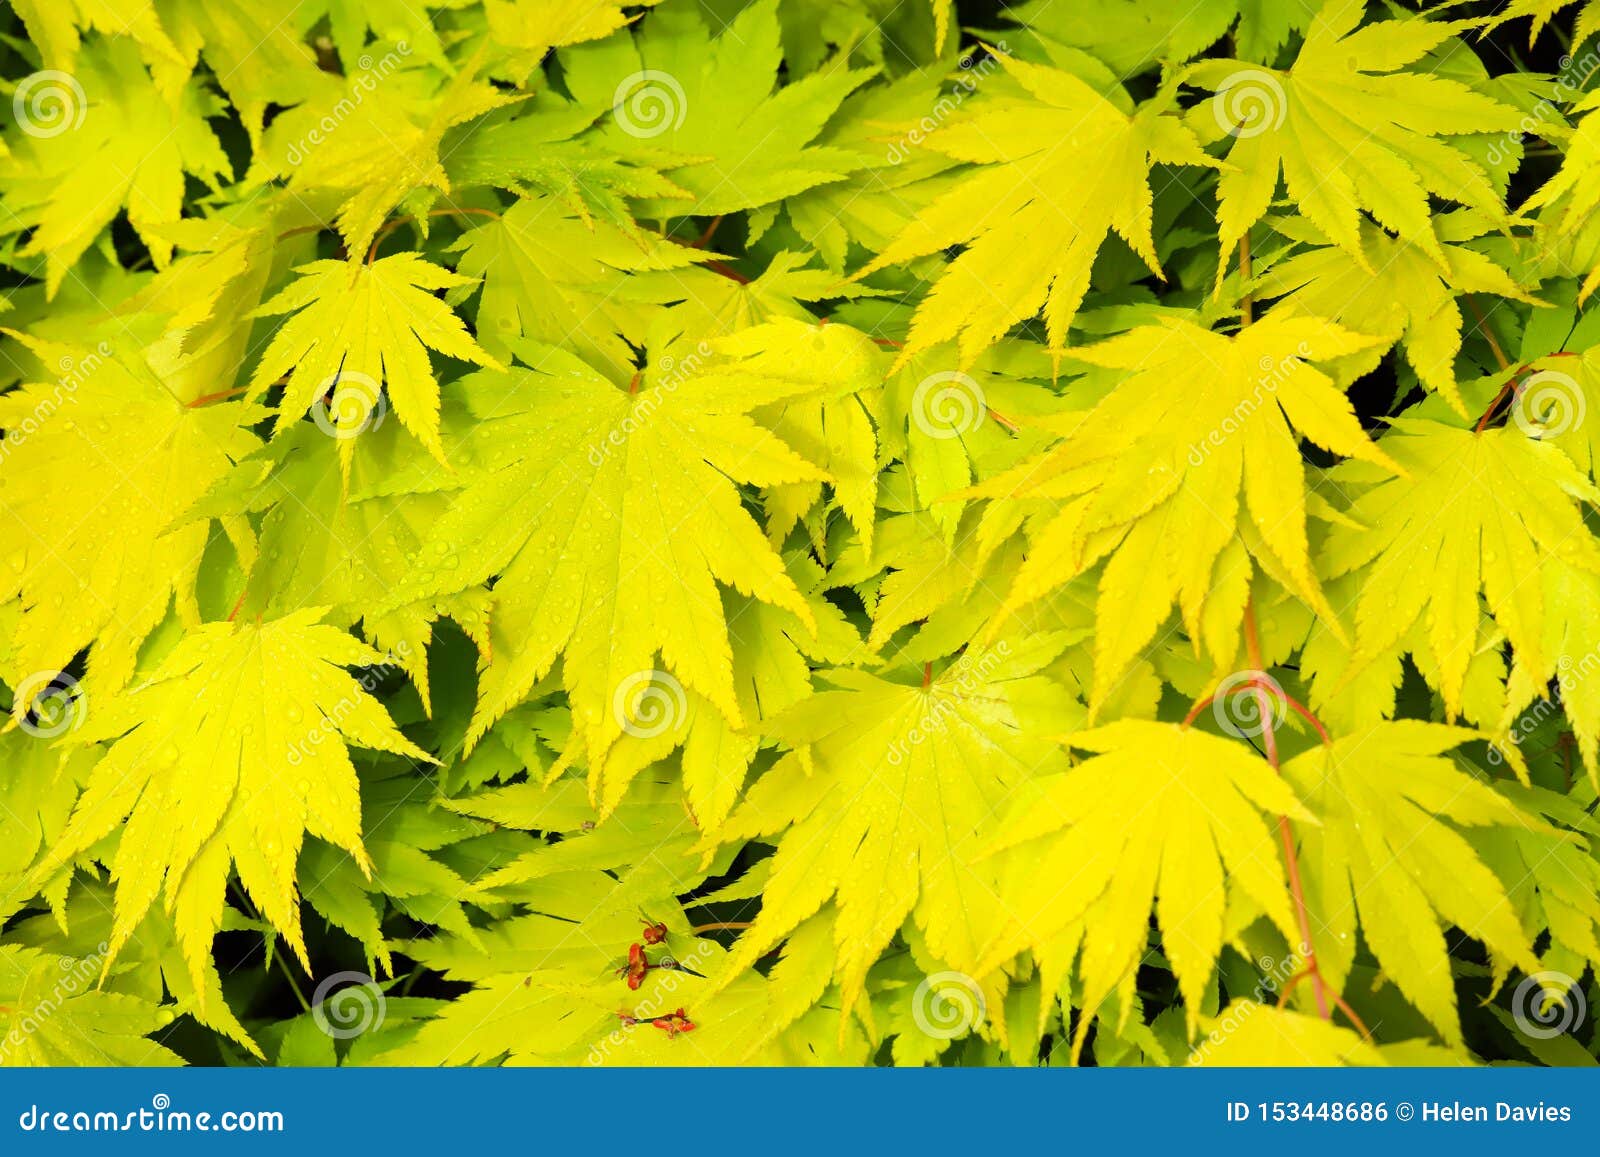 Fresh Green Japanese Maple Acer Palmatum Leaves Stock Photo - Image of